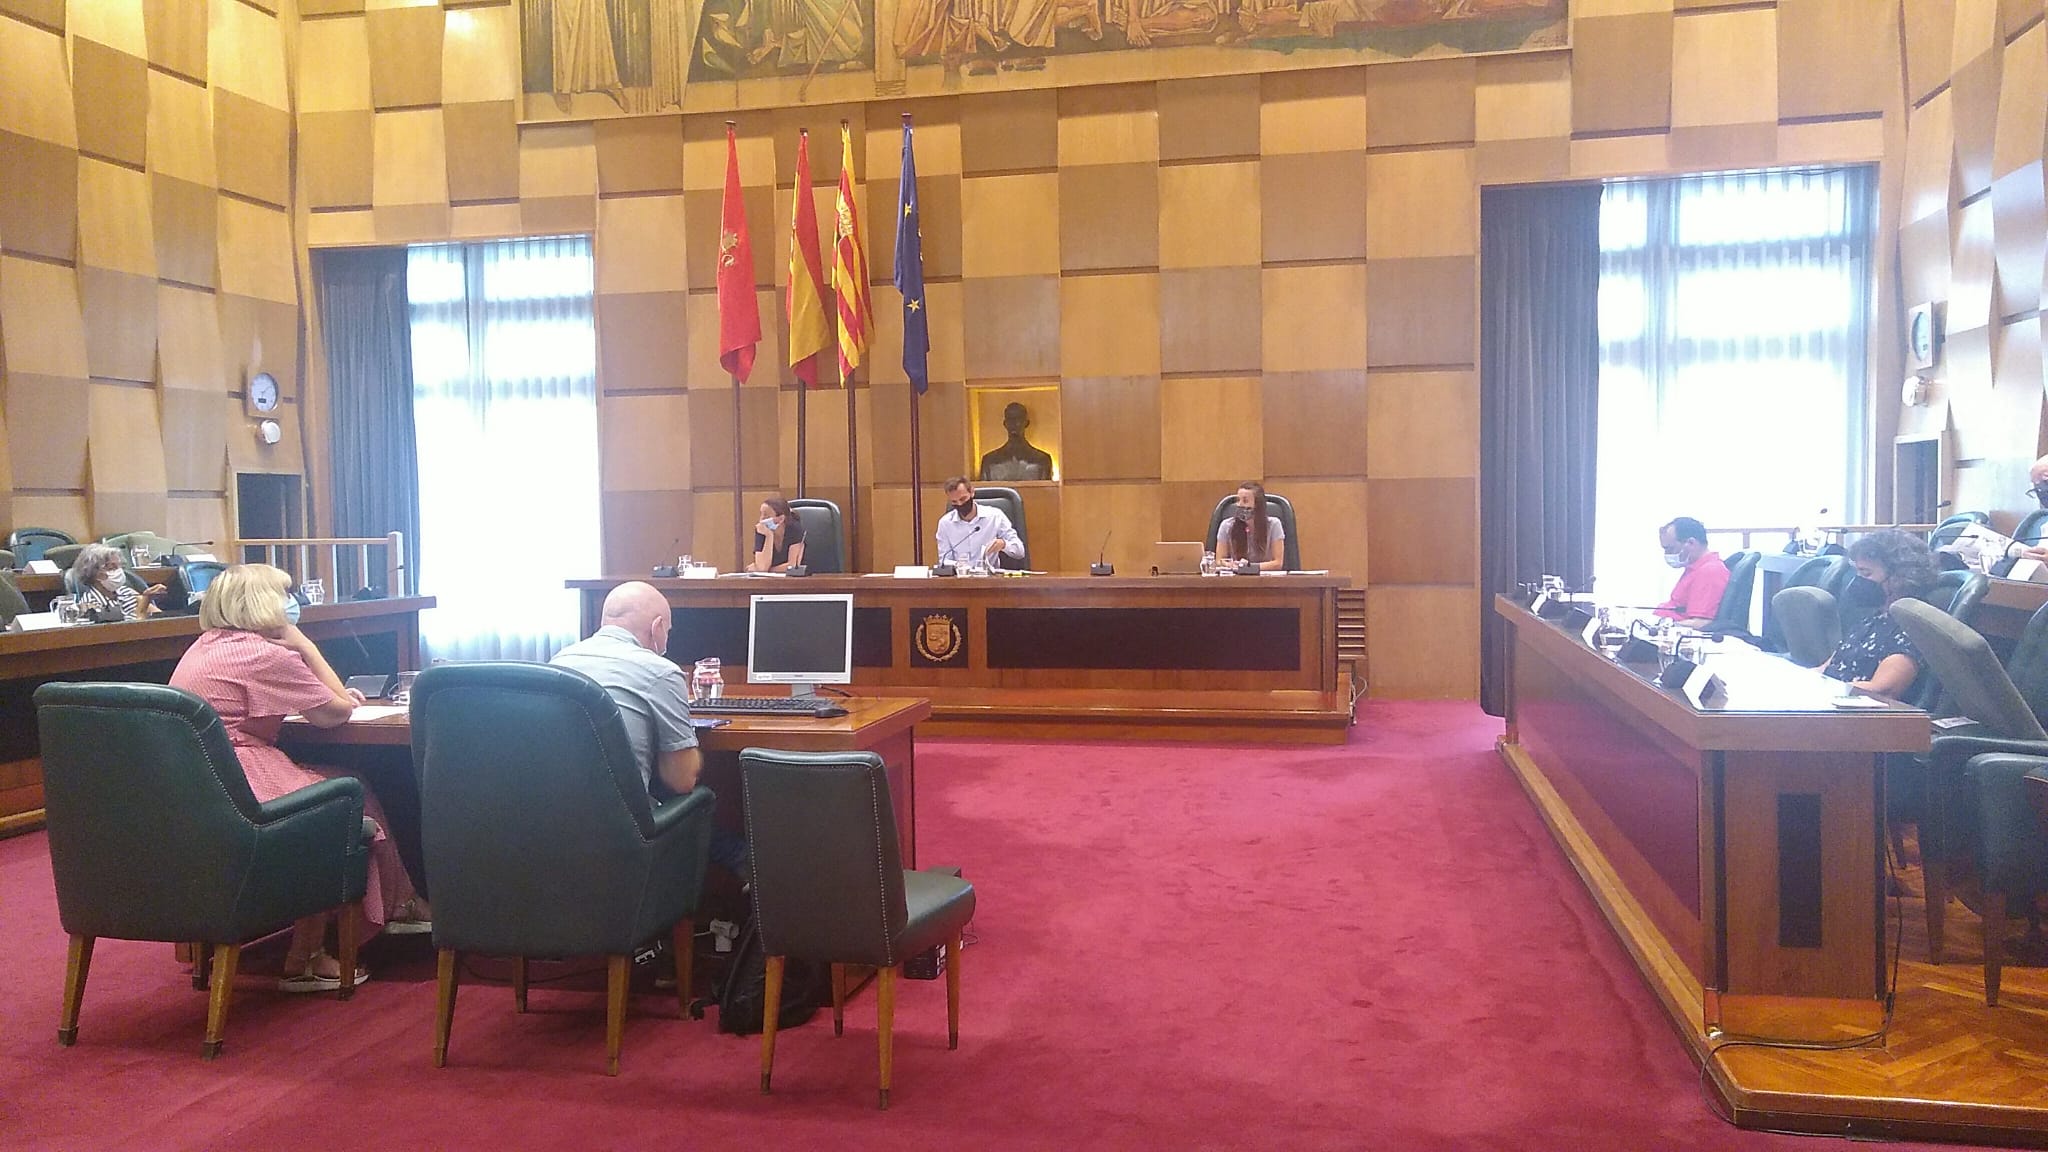 Aprobación del Consejo Alimentario Municipal de Zaragoza (CALMZ)